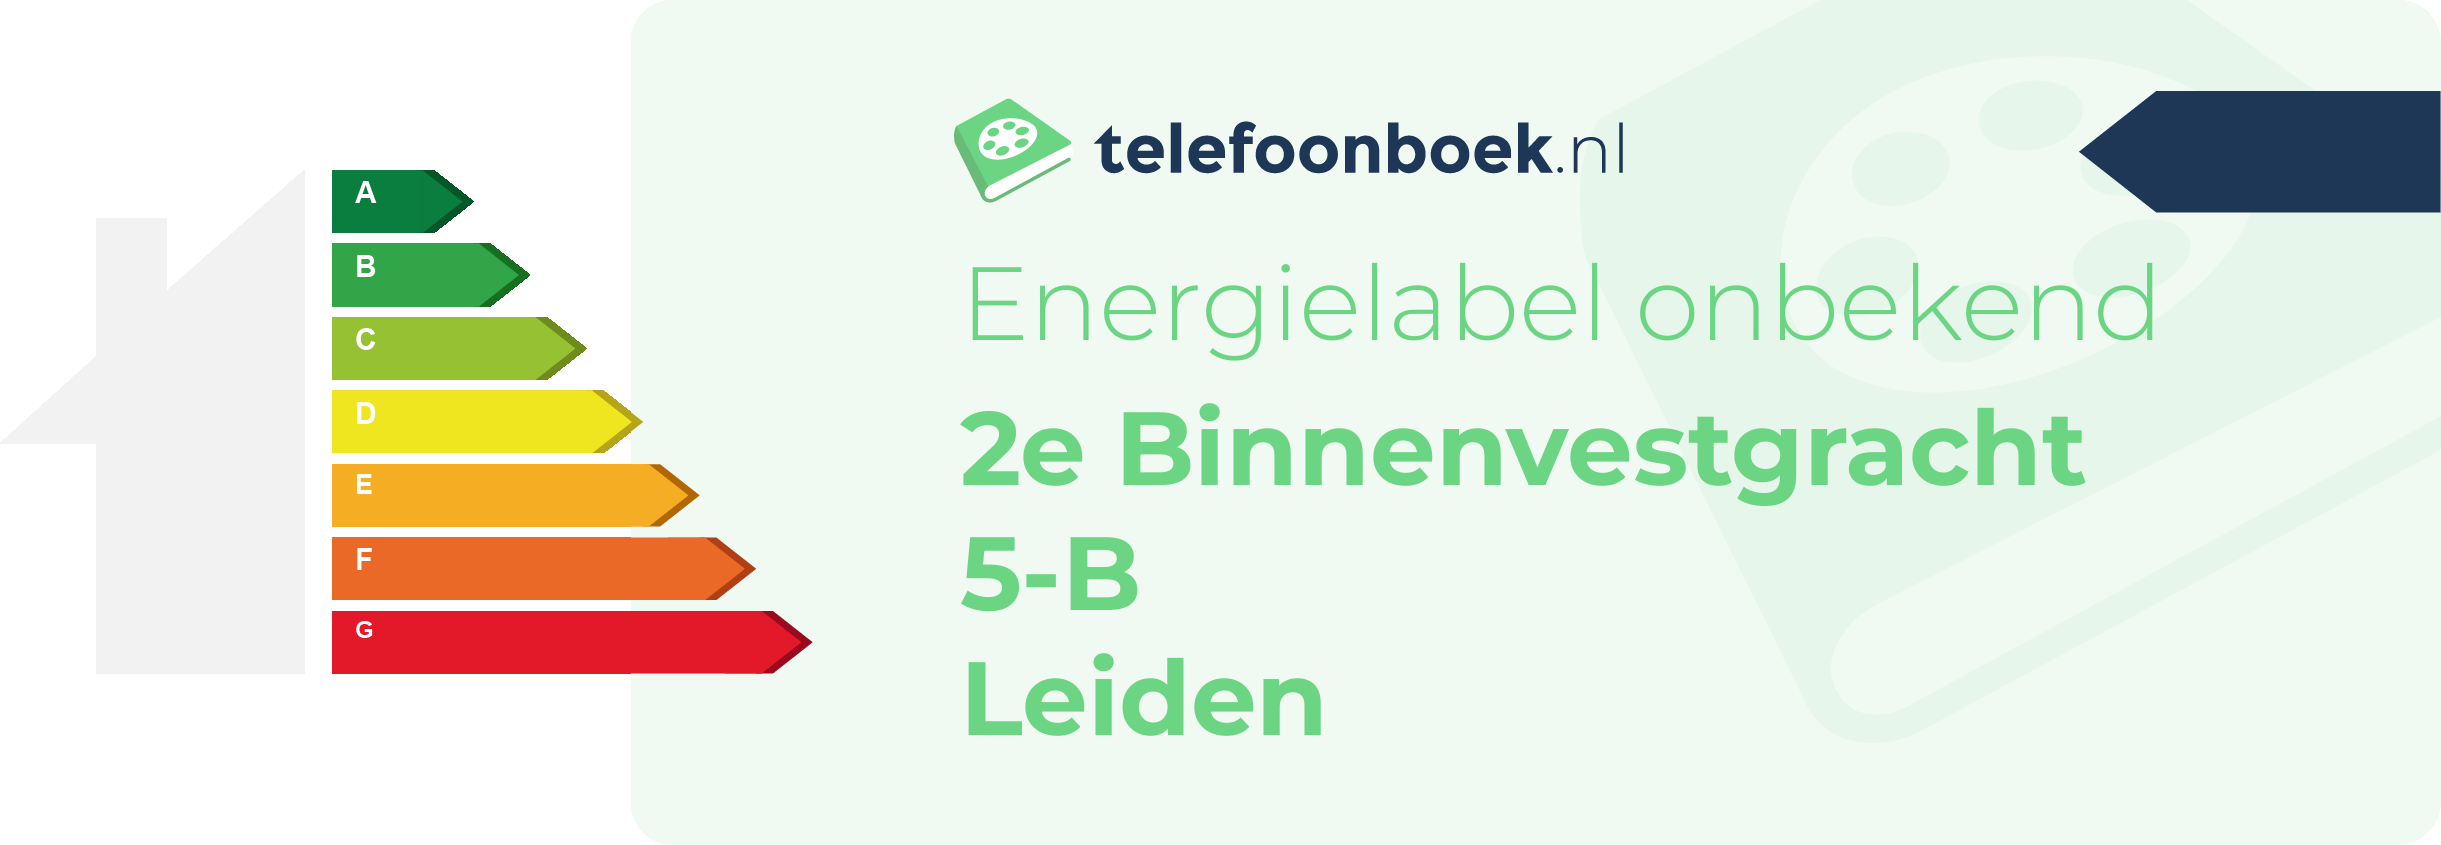 Energielabel 2e Binnenvestgracht 5-B Leiden